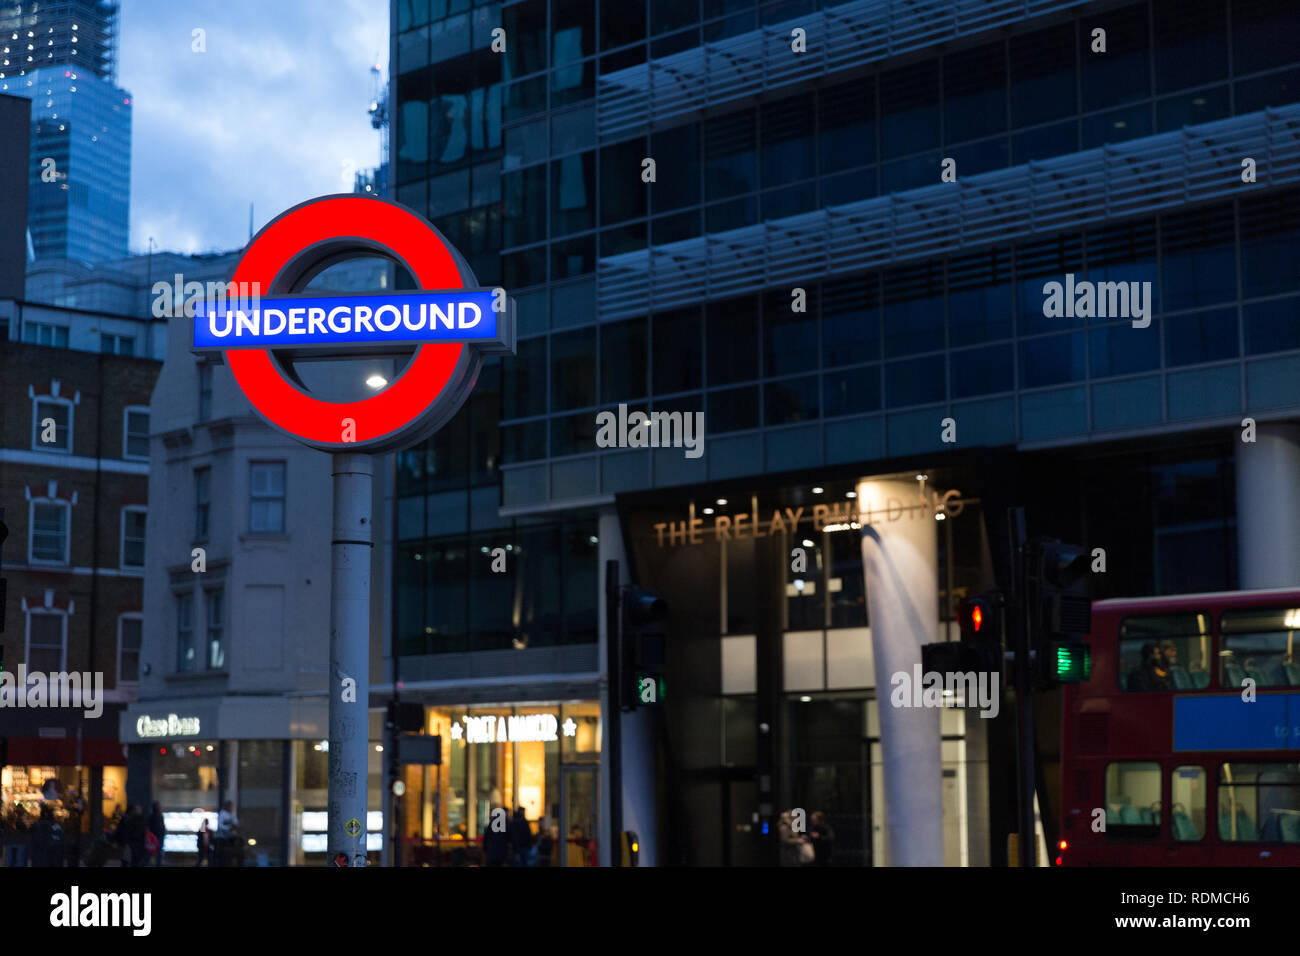 Aldgate East Underground sign, London Stock Photo